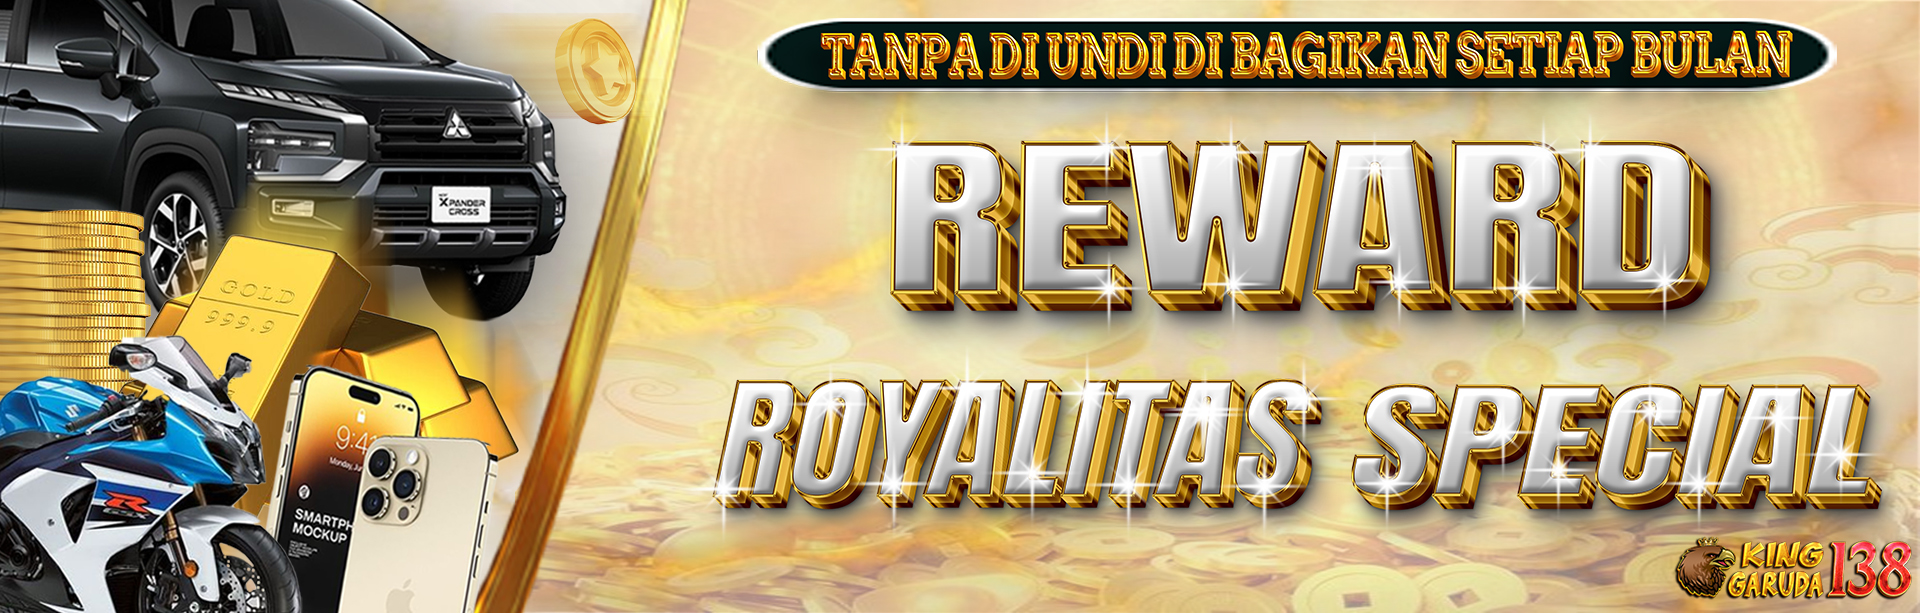 REWARD LOYALITAS VIP KINGGARUDA138